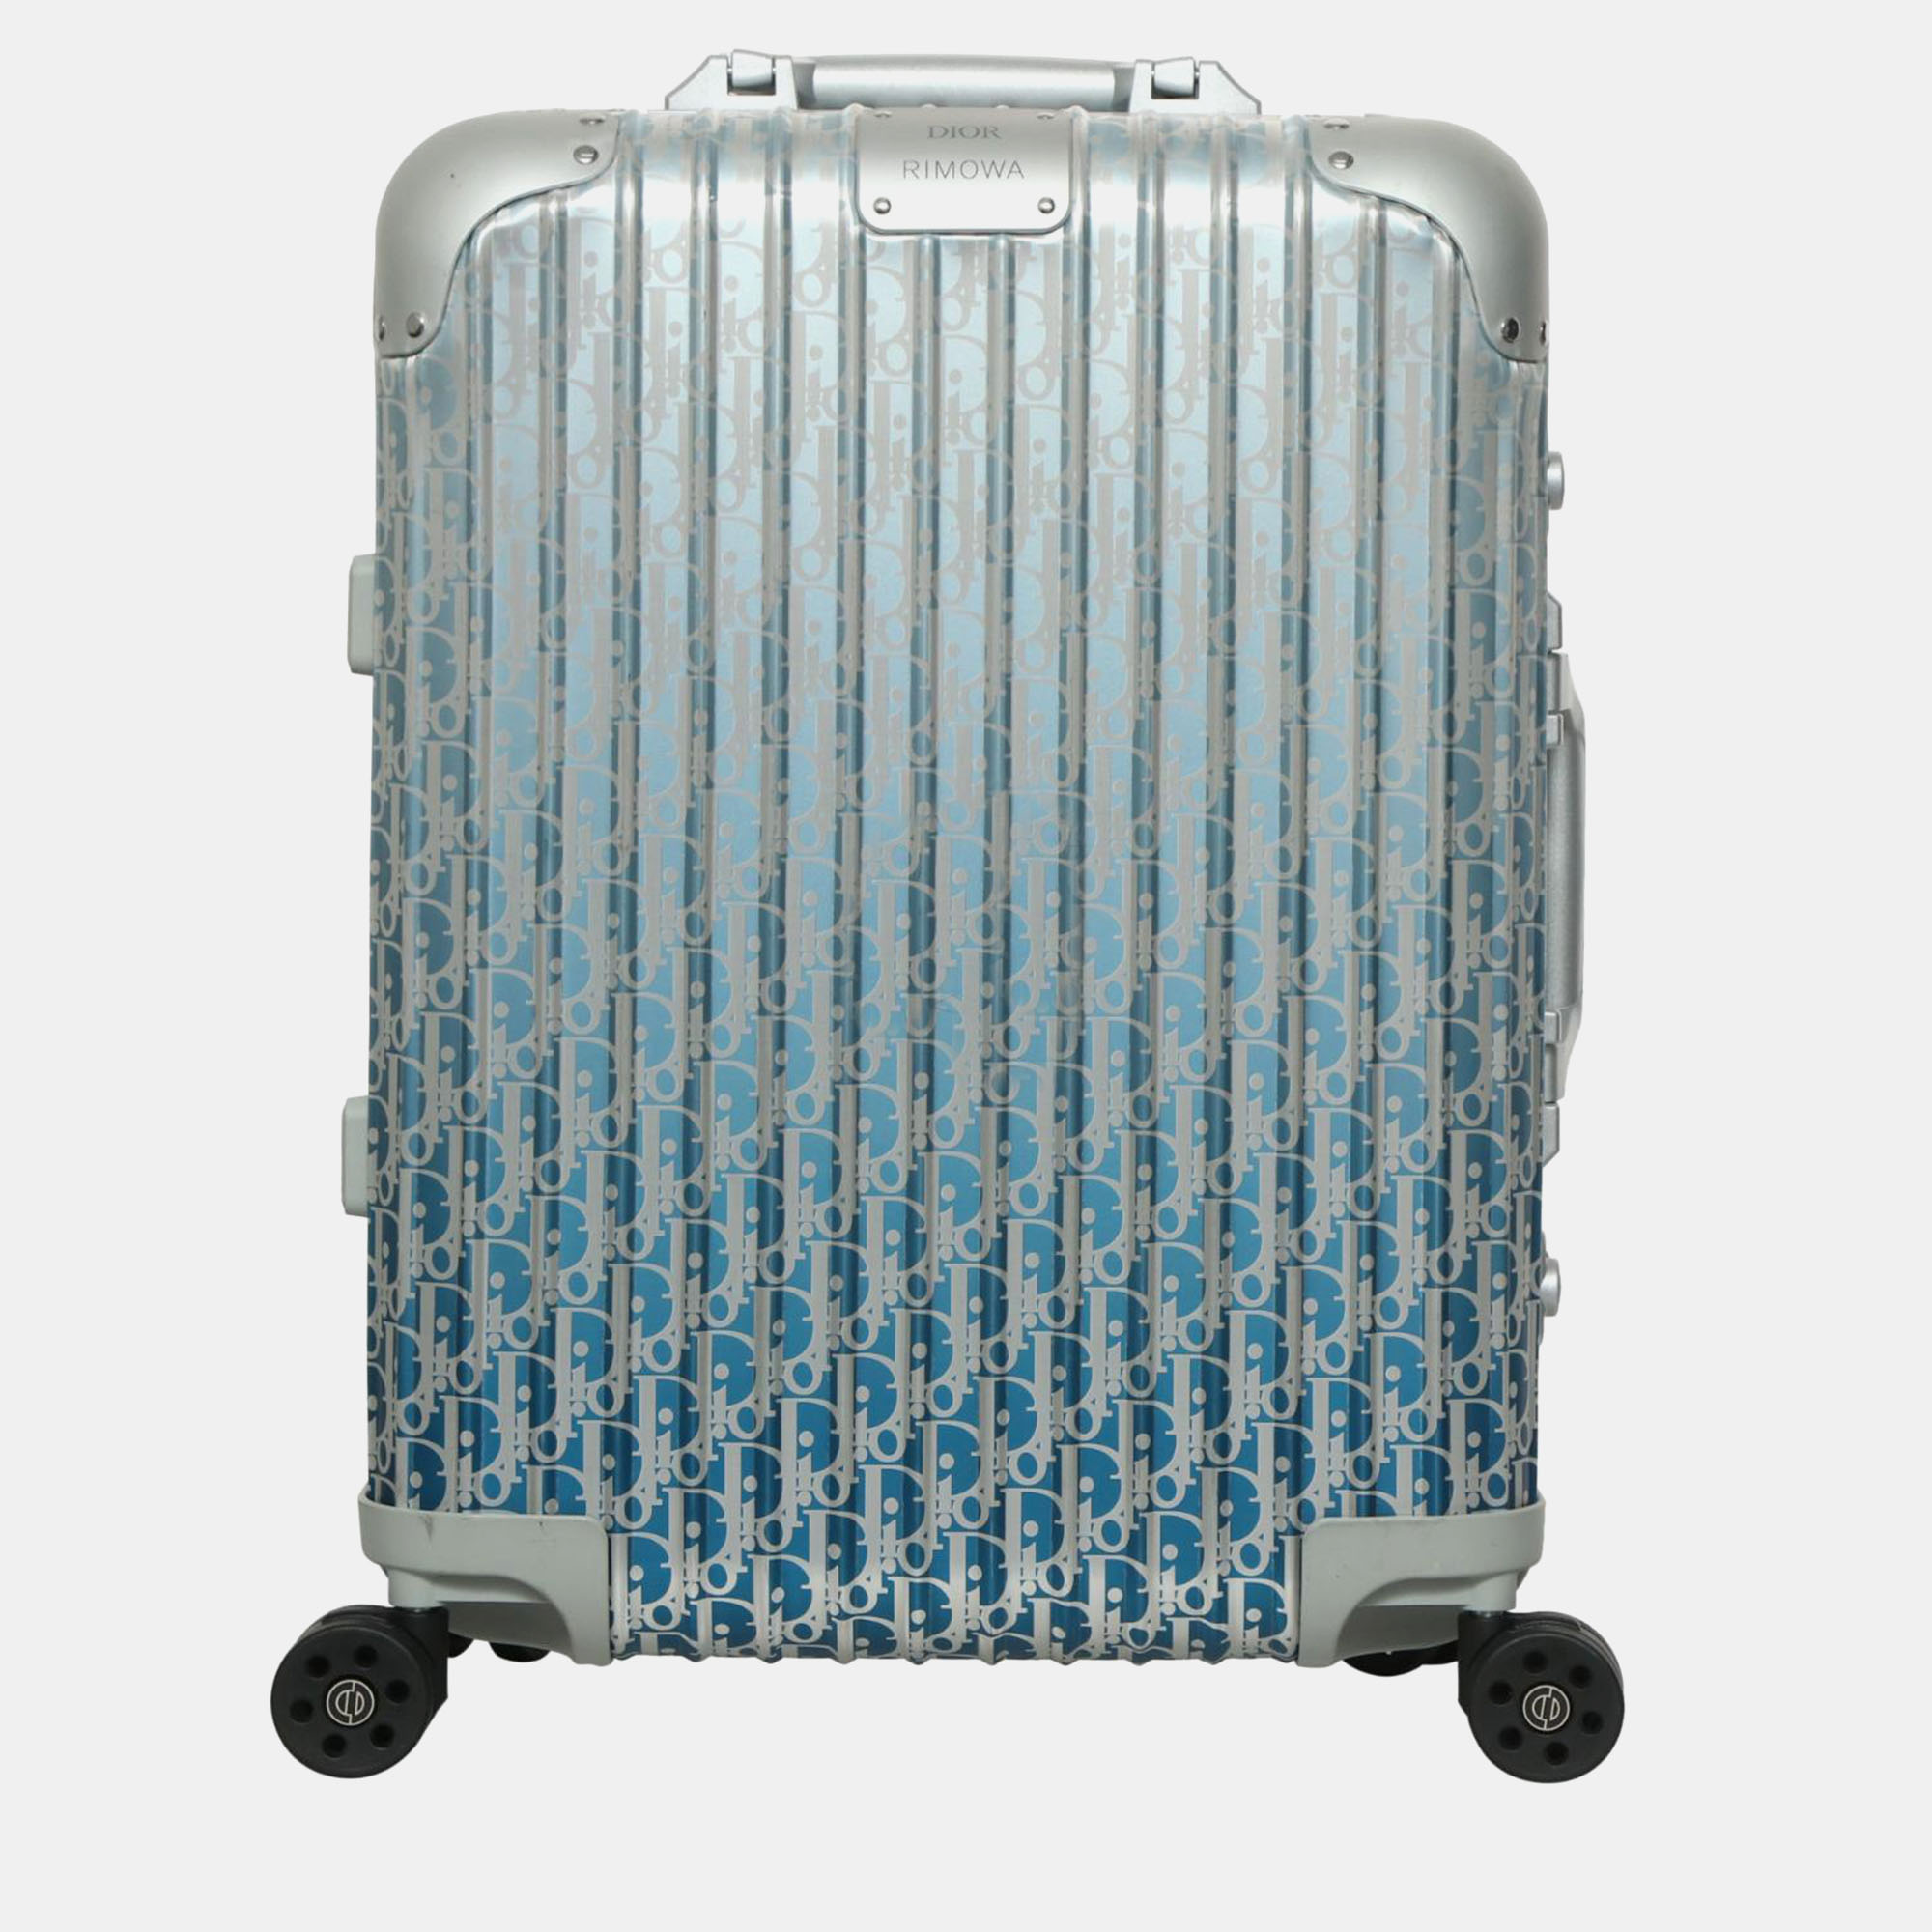 Dior silver/blue aluminium rimowa oblique carry-on suitcase